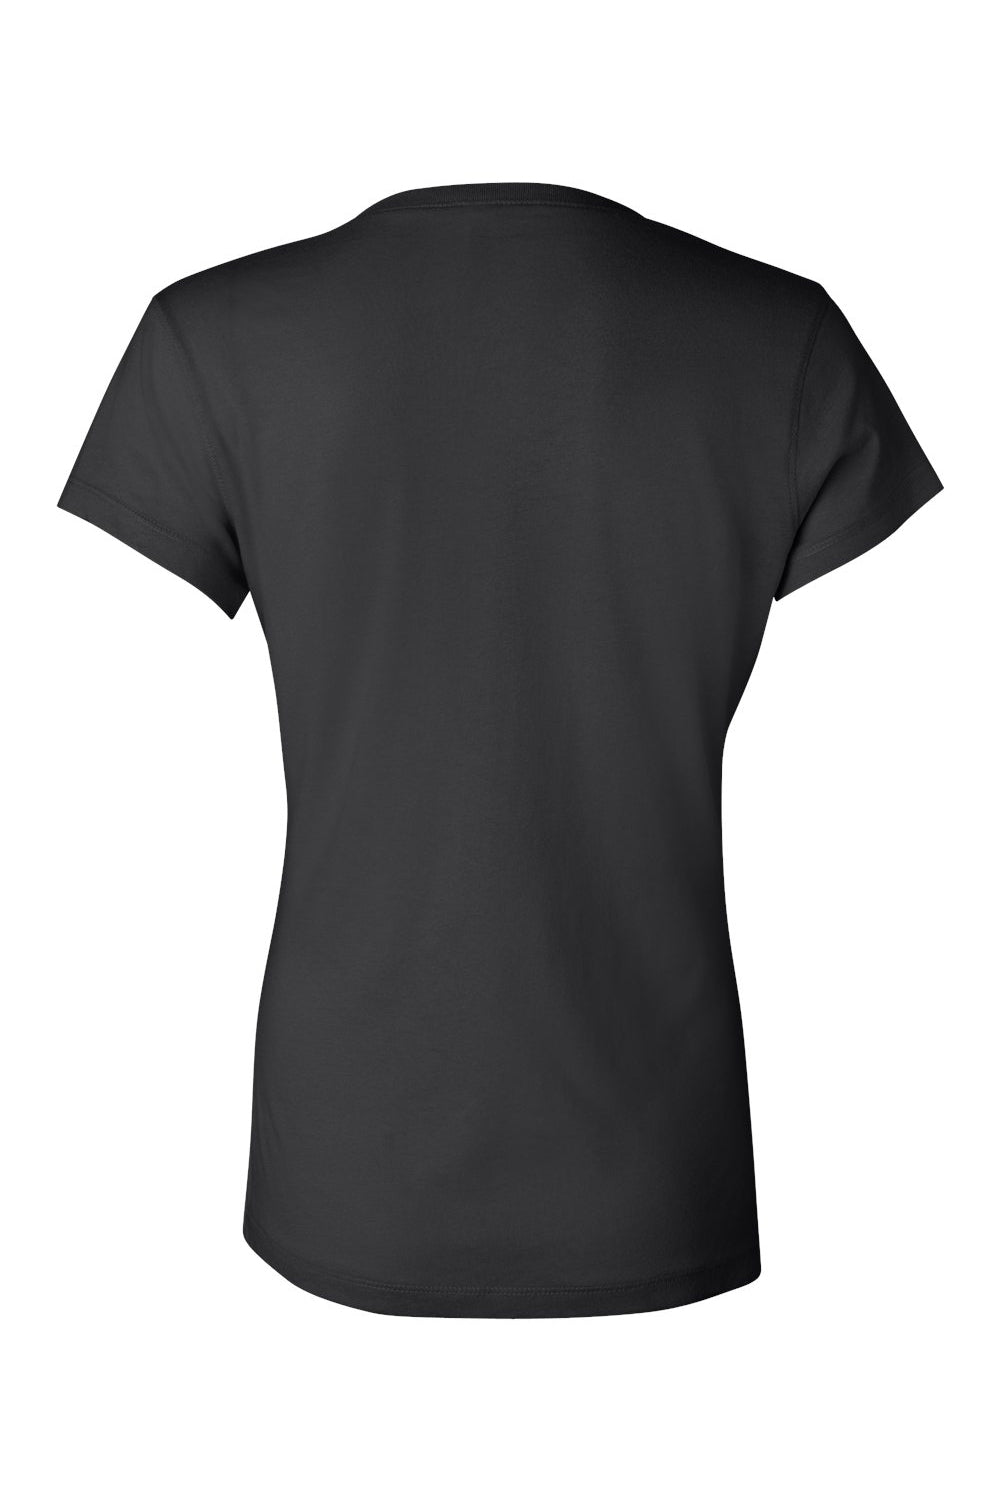 Bella + Canvas B6005/6005 Womens Jersey Short Sleeve V-Neck T-Shirt Black Flat Back